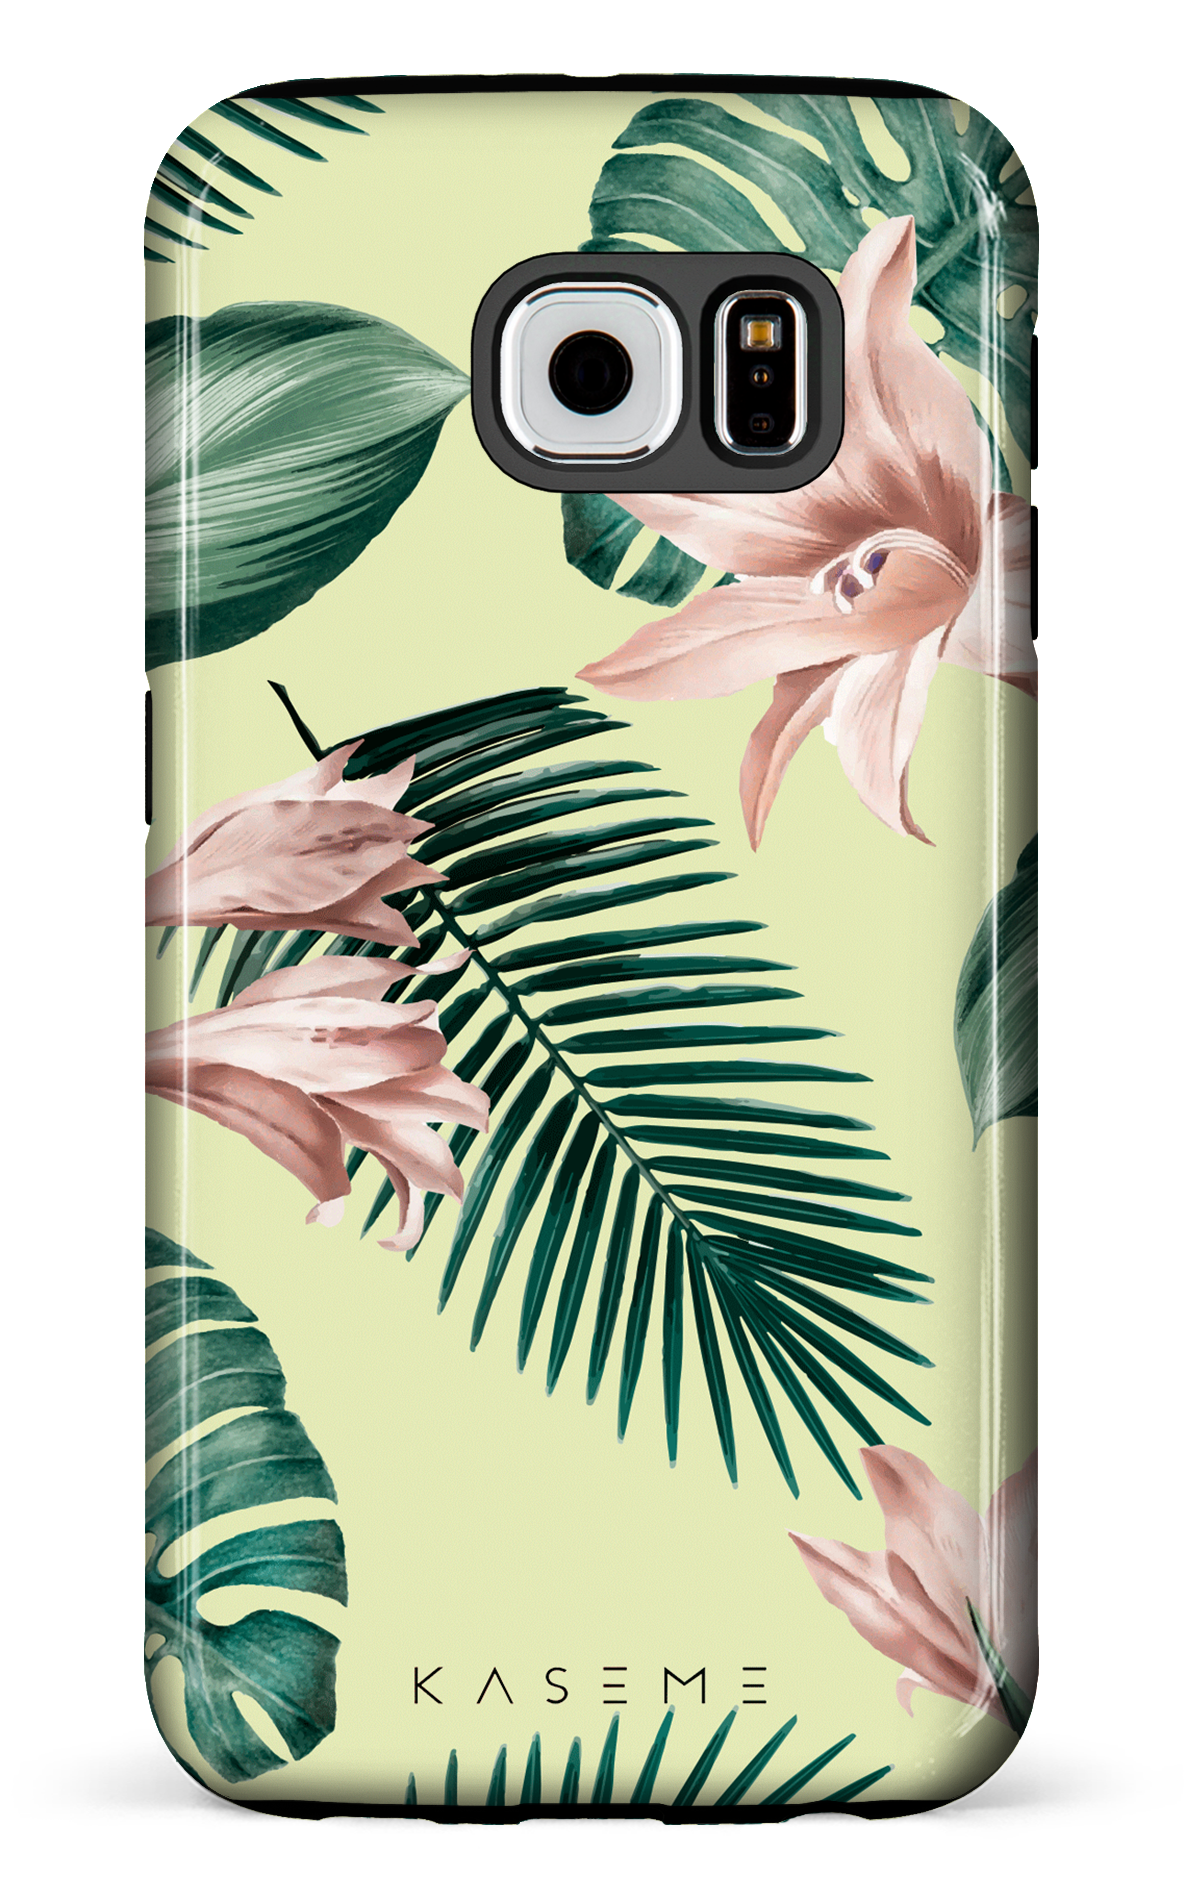 Maui - Galaxy S6